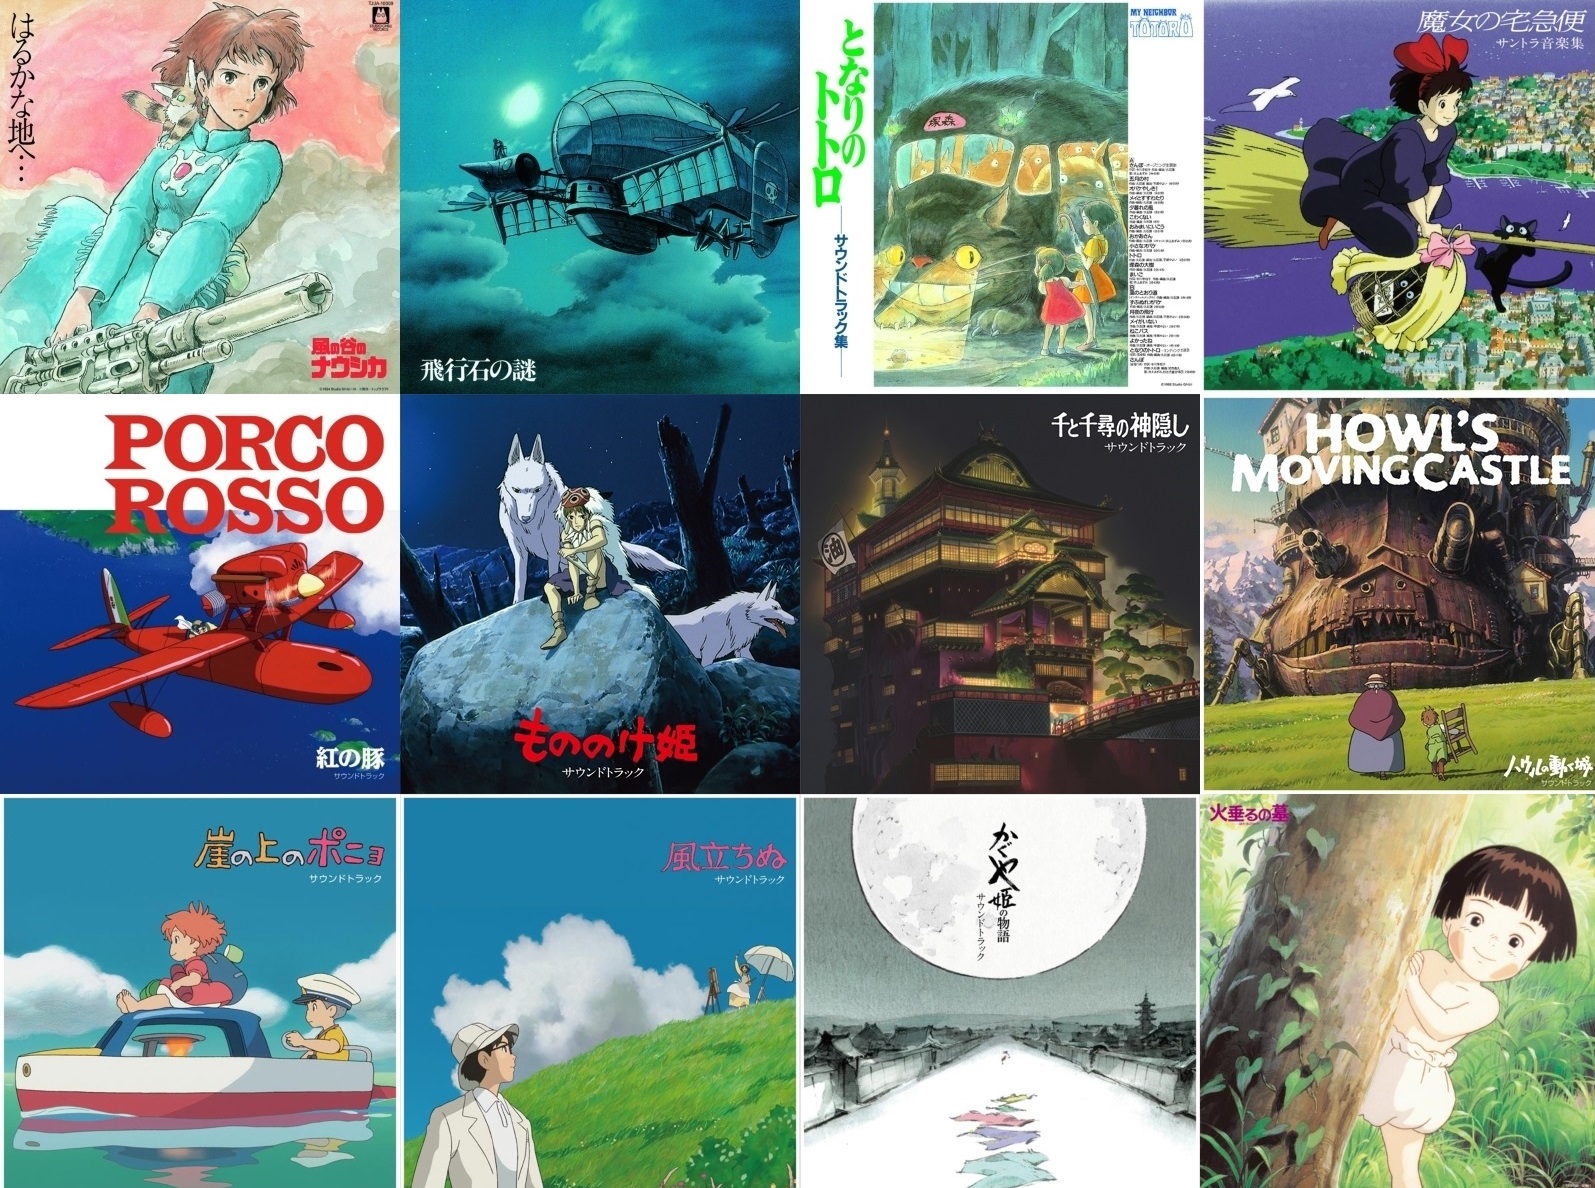 Spirited Away Soundtrack 2xLP Vinyl Record Album Joe hisaishi ghibli anime  New melpoejocombr